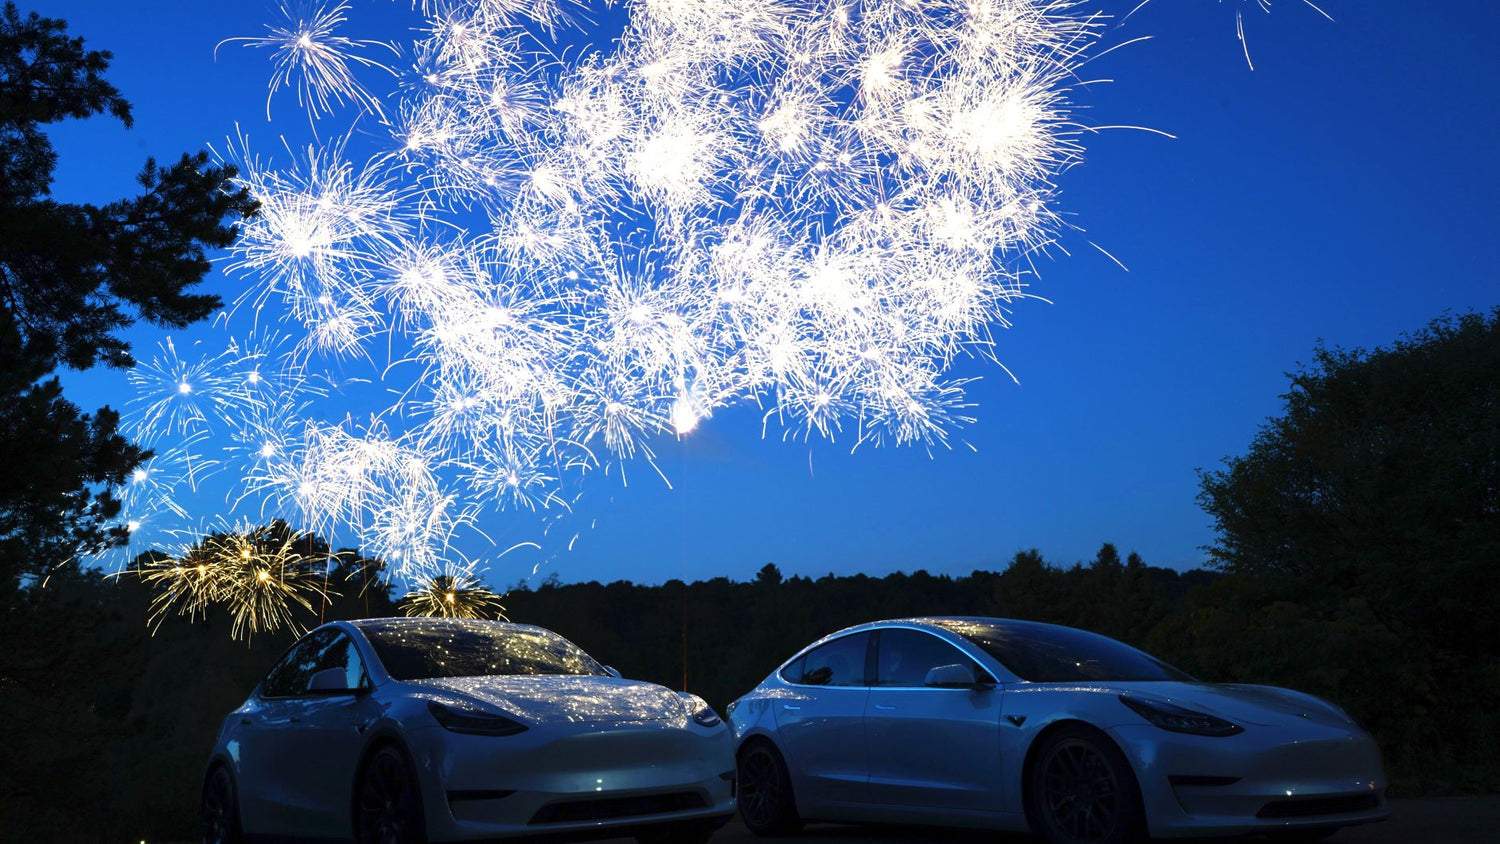 Tesla Shares TSLA Skyrocketing With Eye S&P500 Inclusion, Bears Amass $20B Shorts